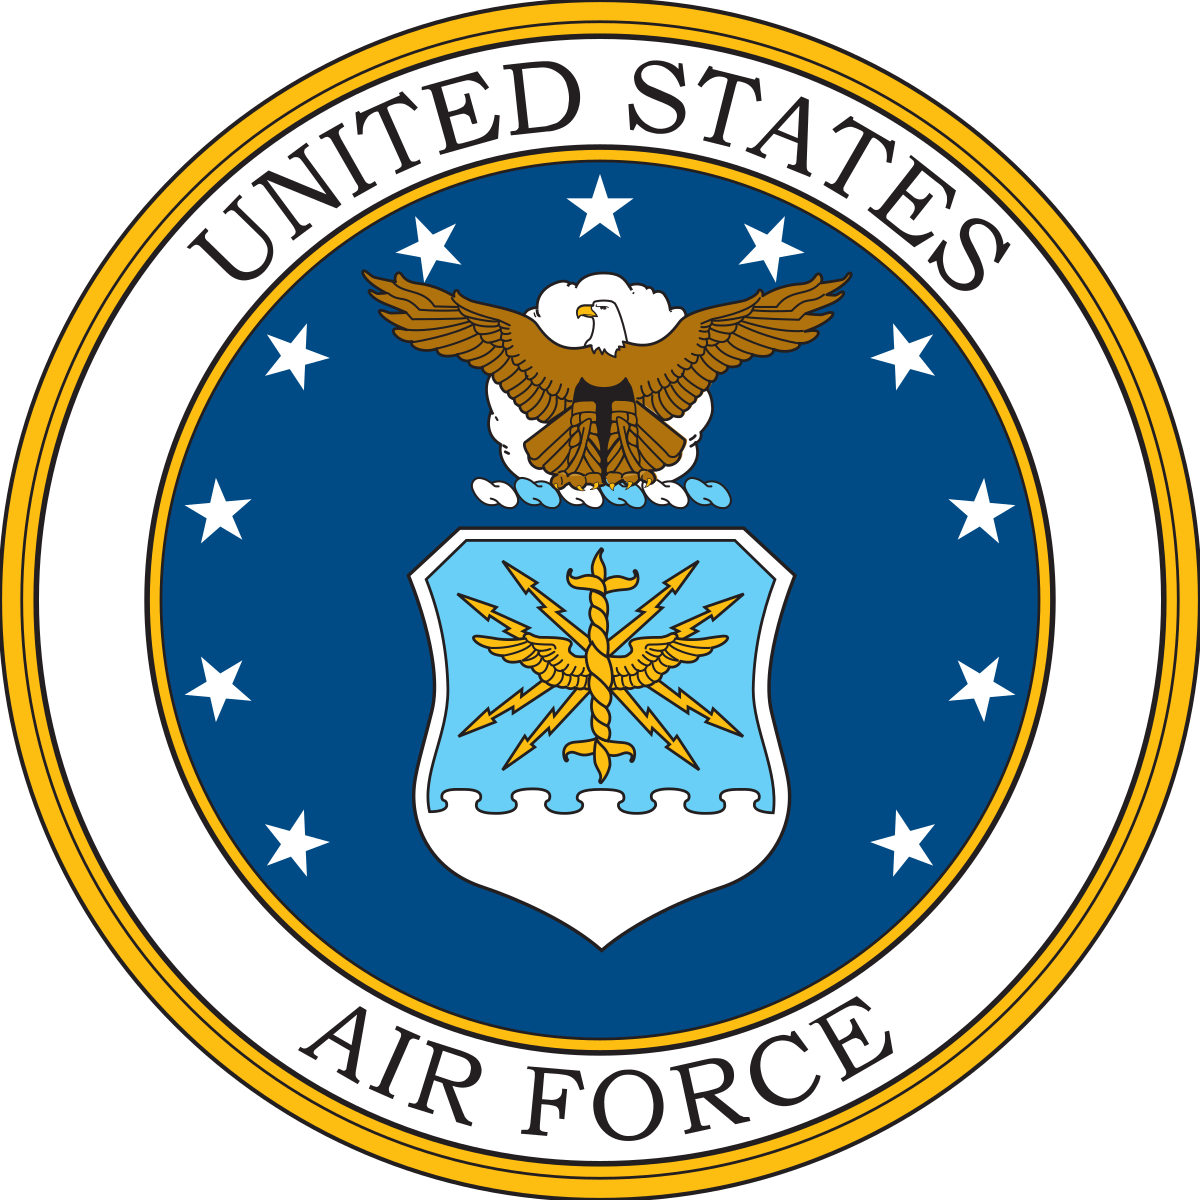 Kirtland Air Force Base - Wikipedia